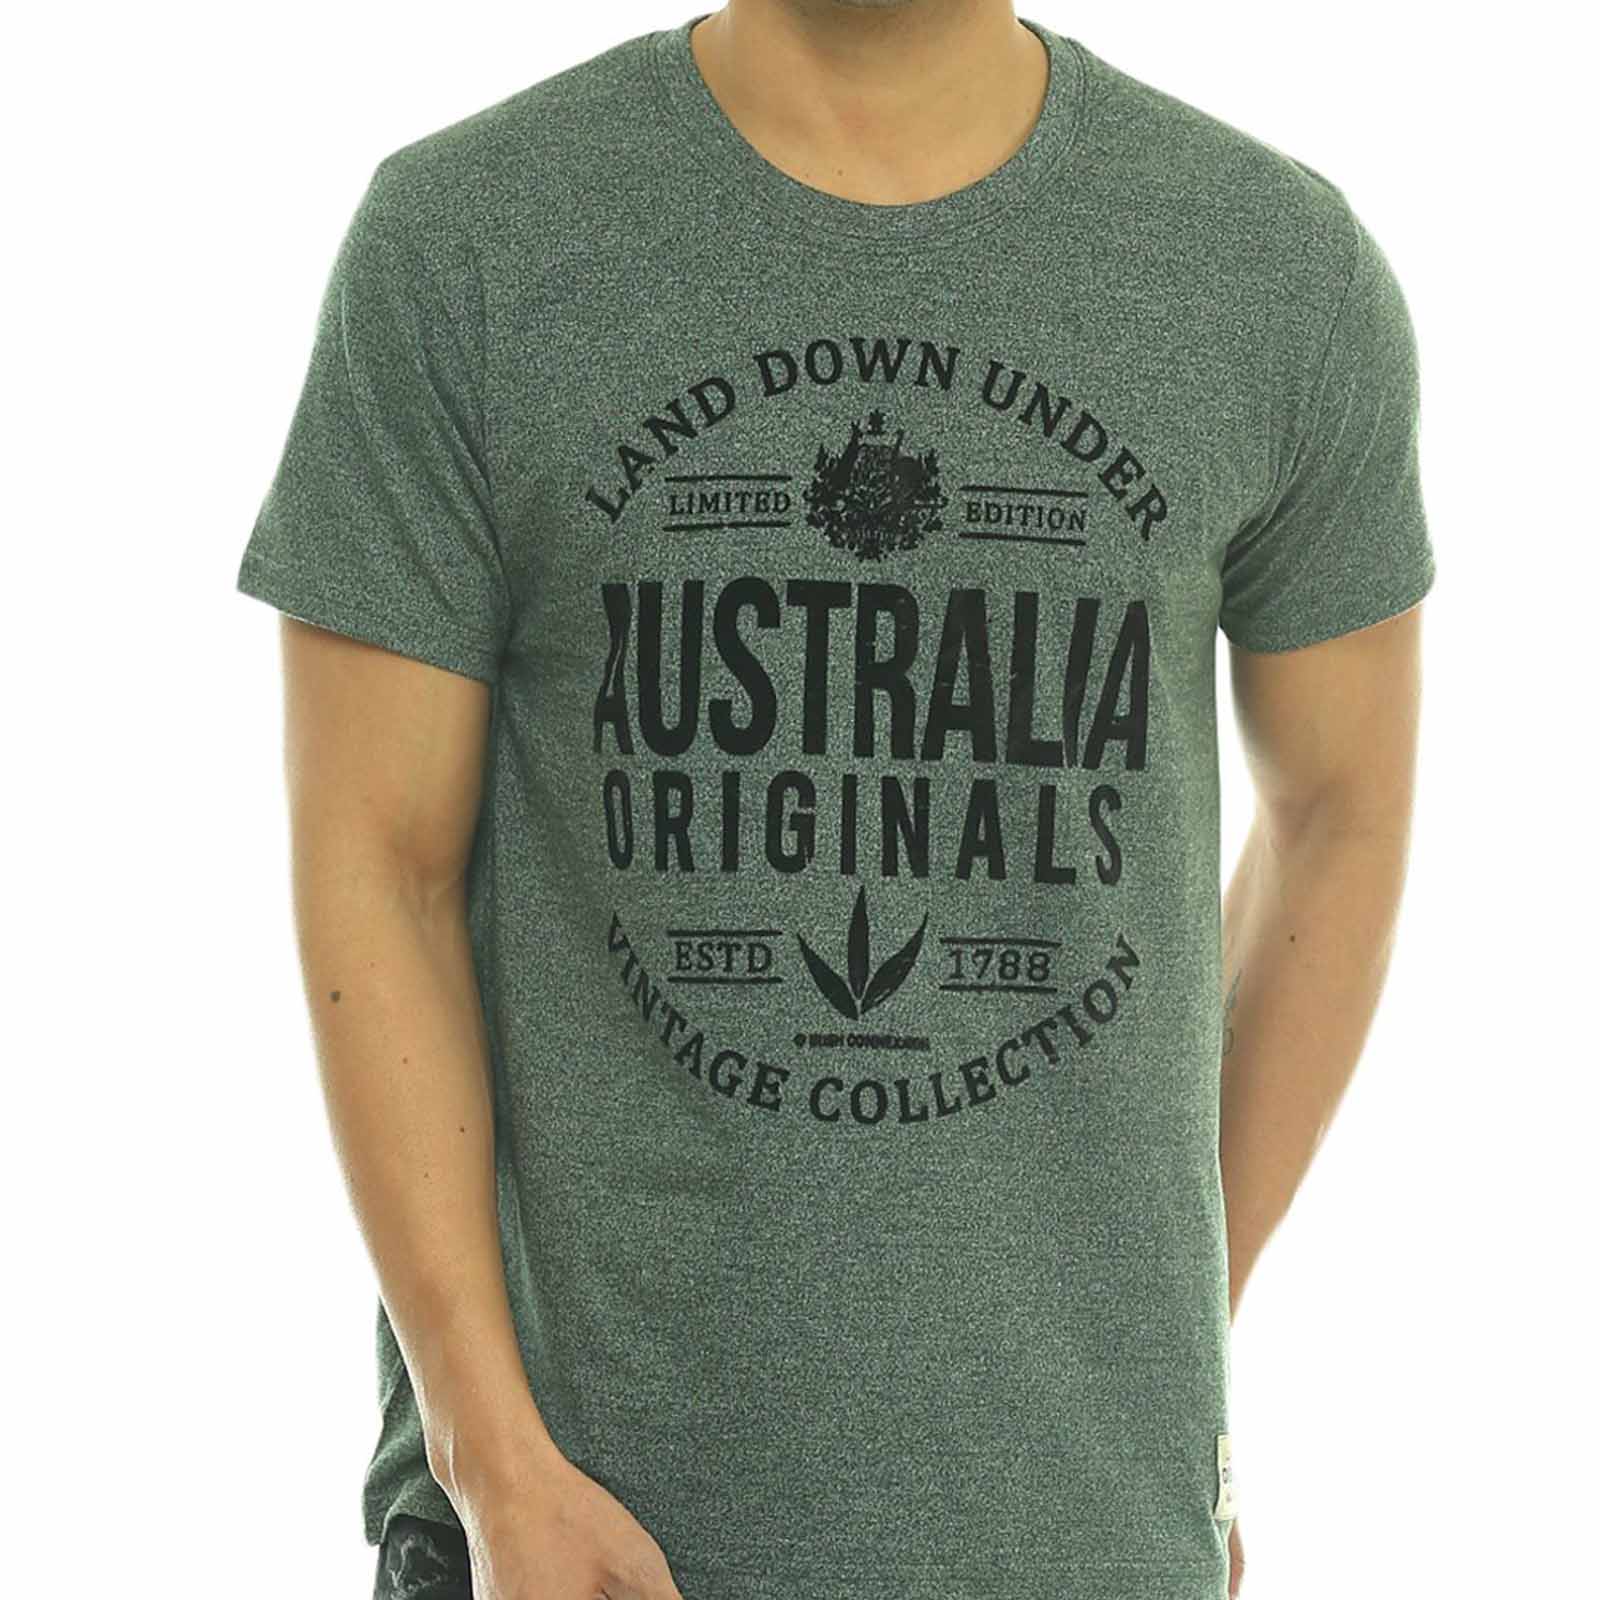 Australia Originals T-Shirt